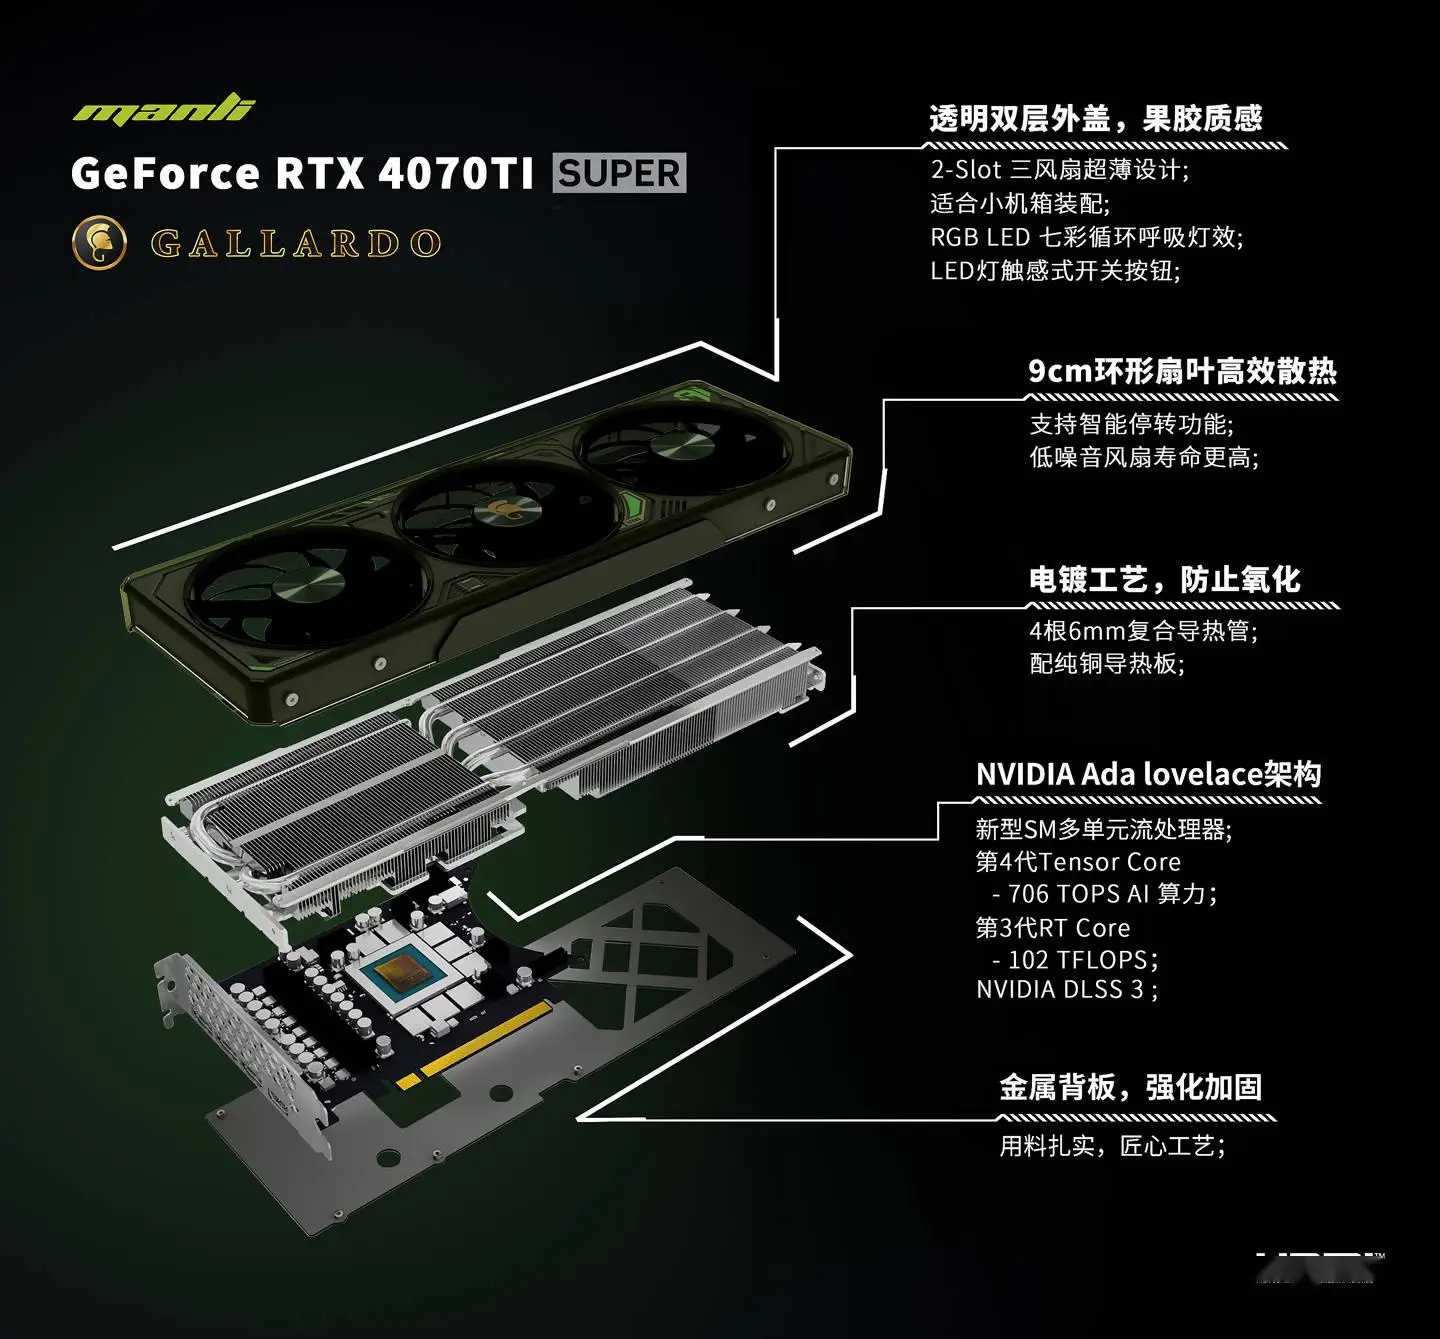 GT620 DDR3显卡：性能较低却无噪音，适合轻度办公与娱乐需求  第4张